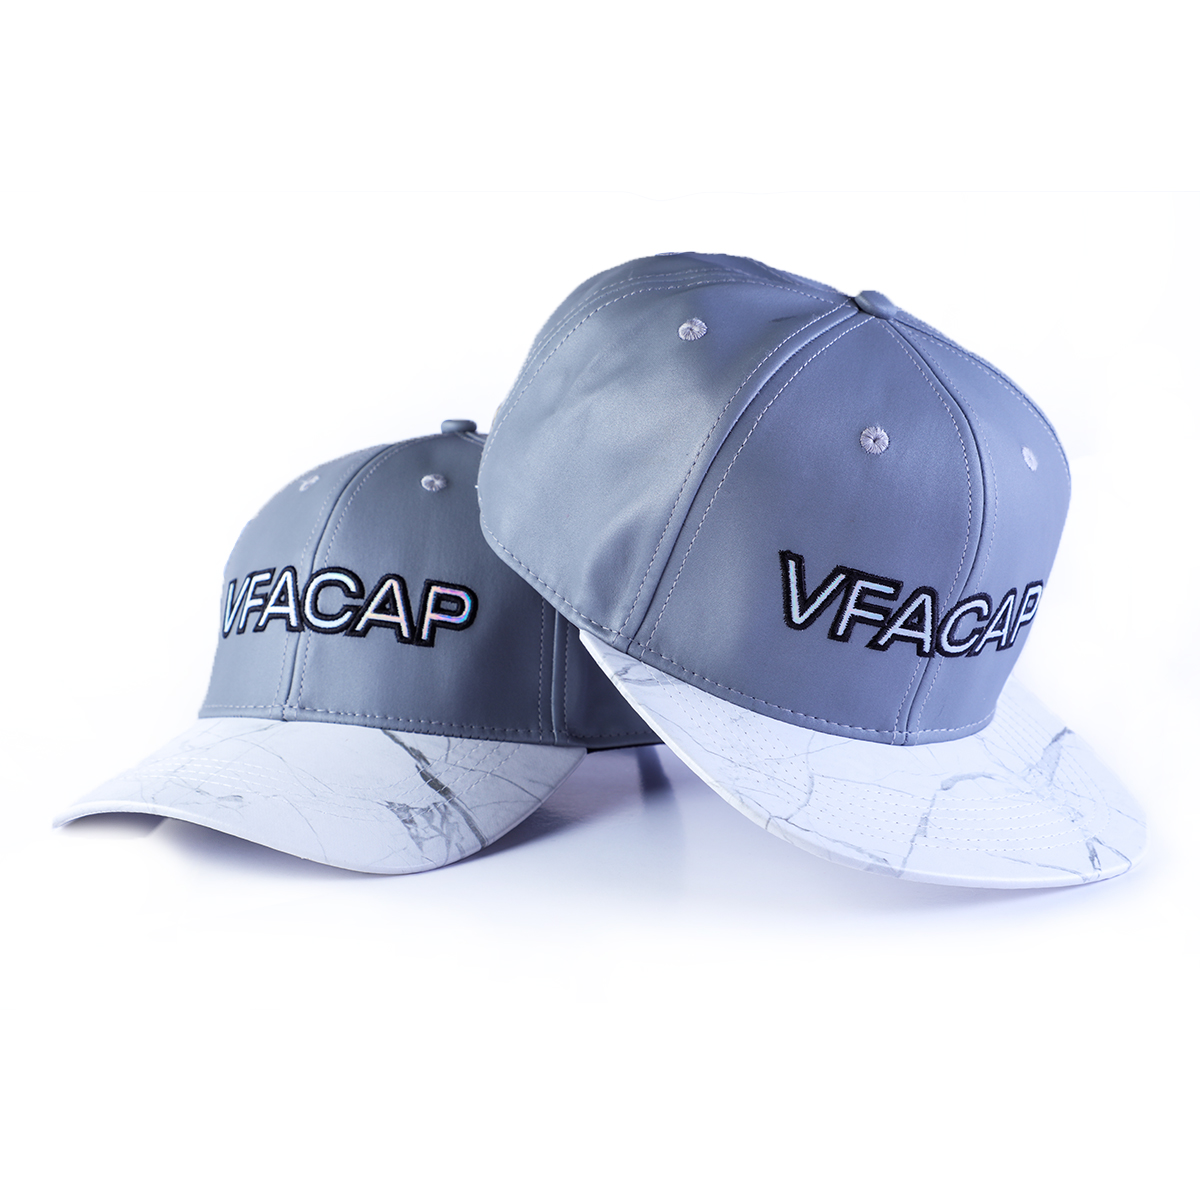 impresión borde 3d bordado vfa gorras de béisbol personalizadas